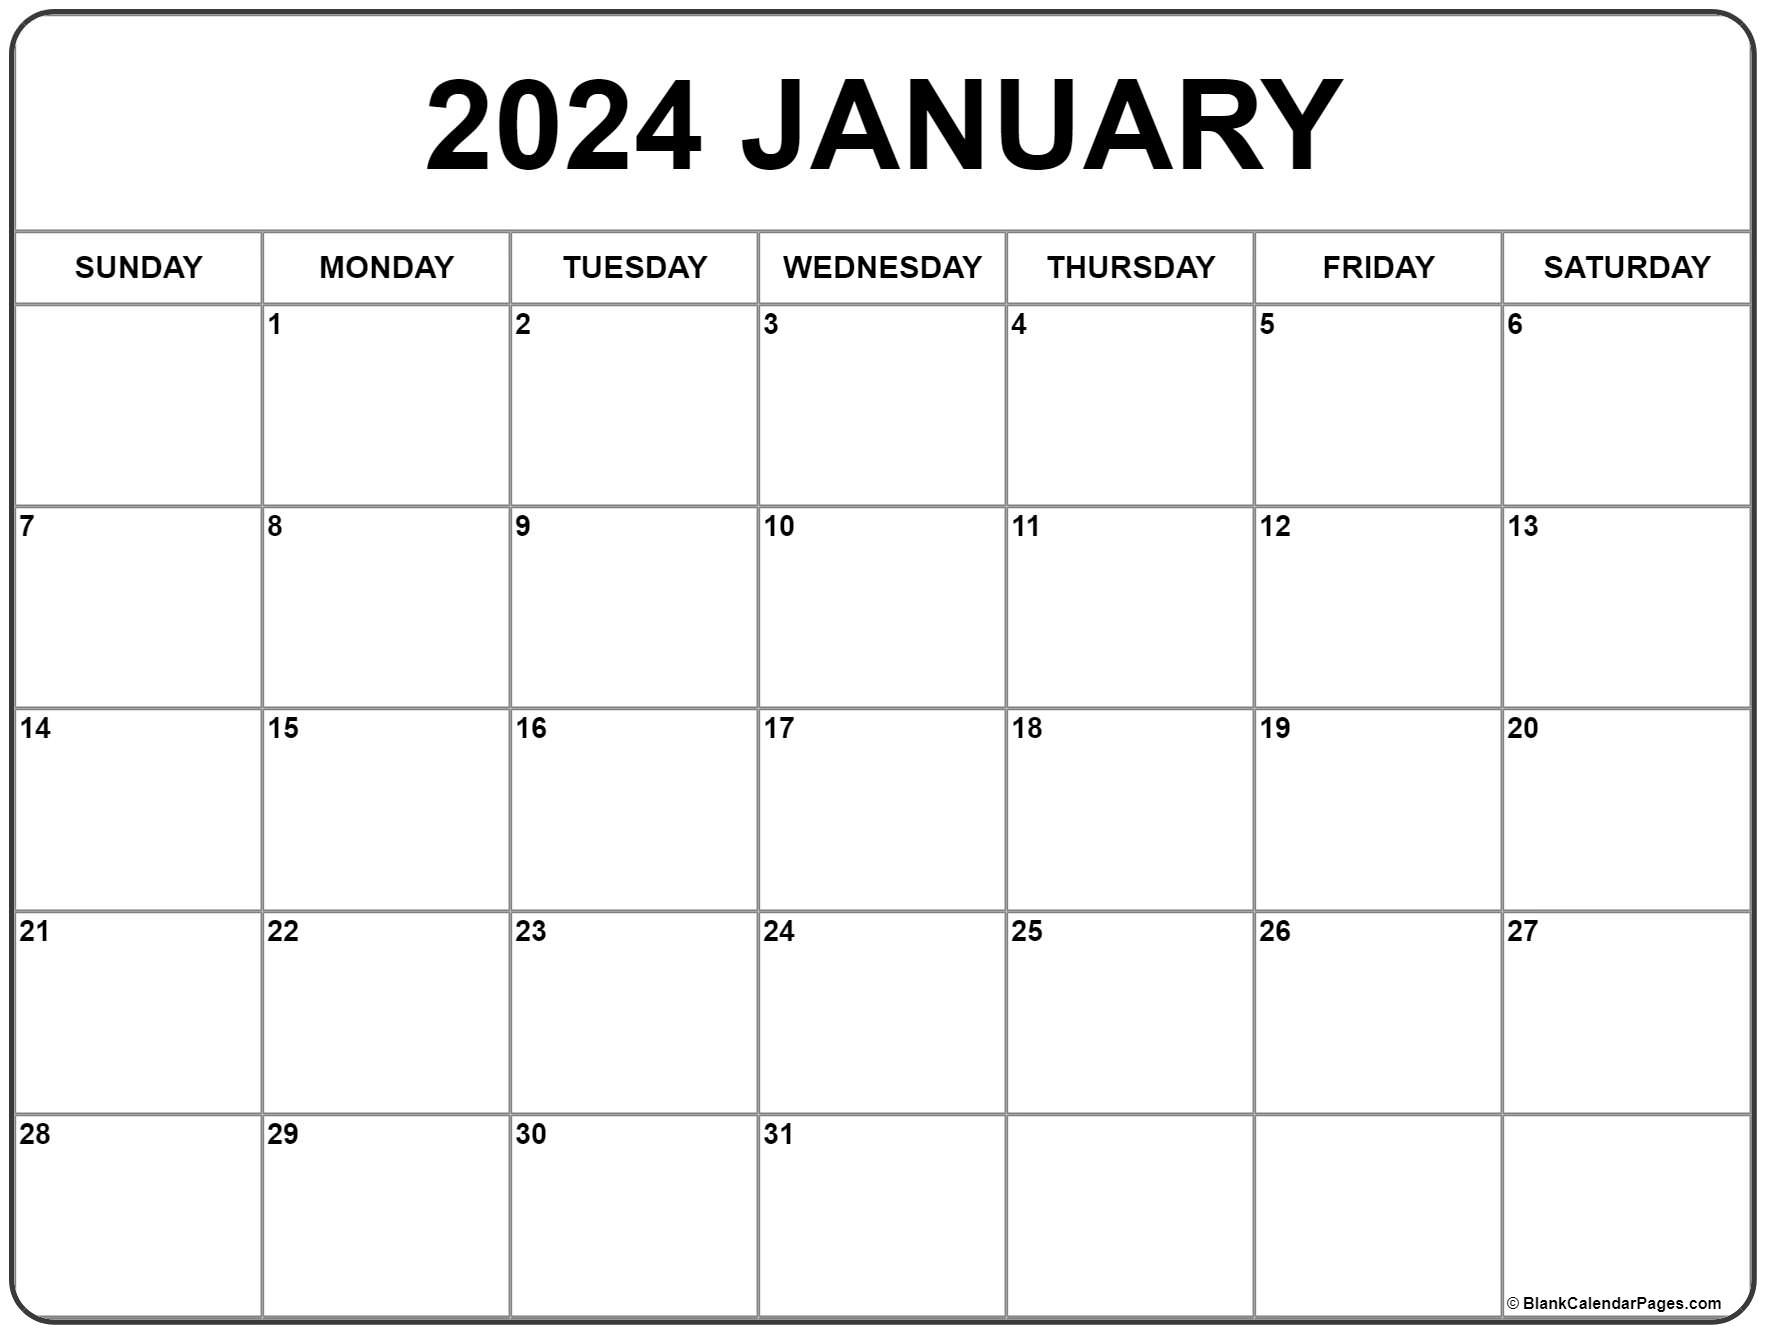 January 2024 Calendar | Free Printable Calendar for Calendar January 2024 Free Printable